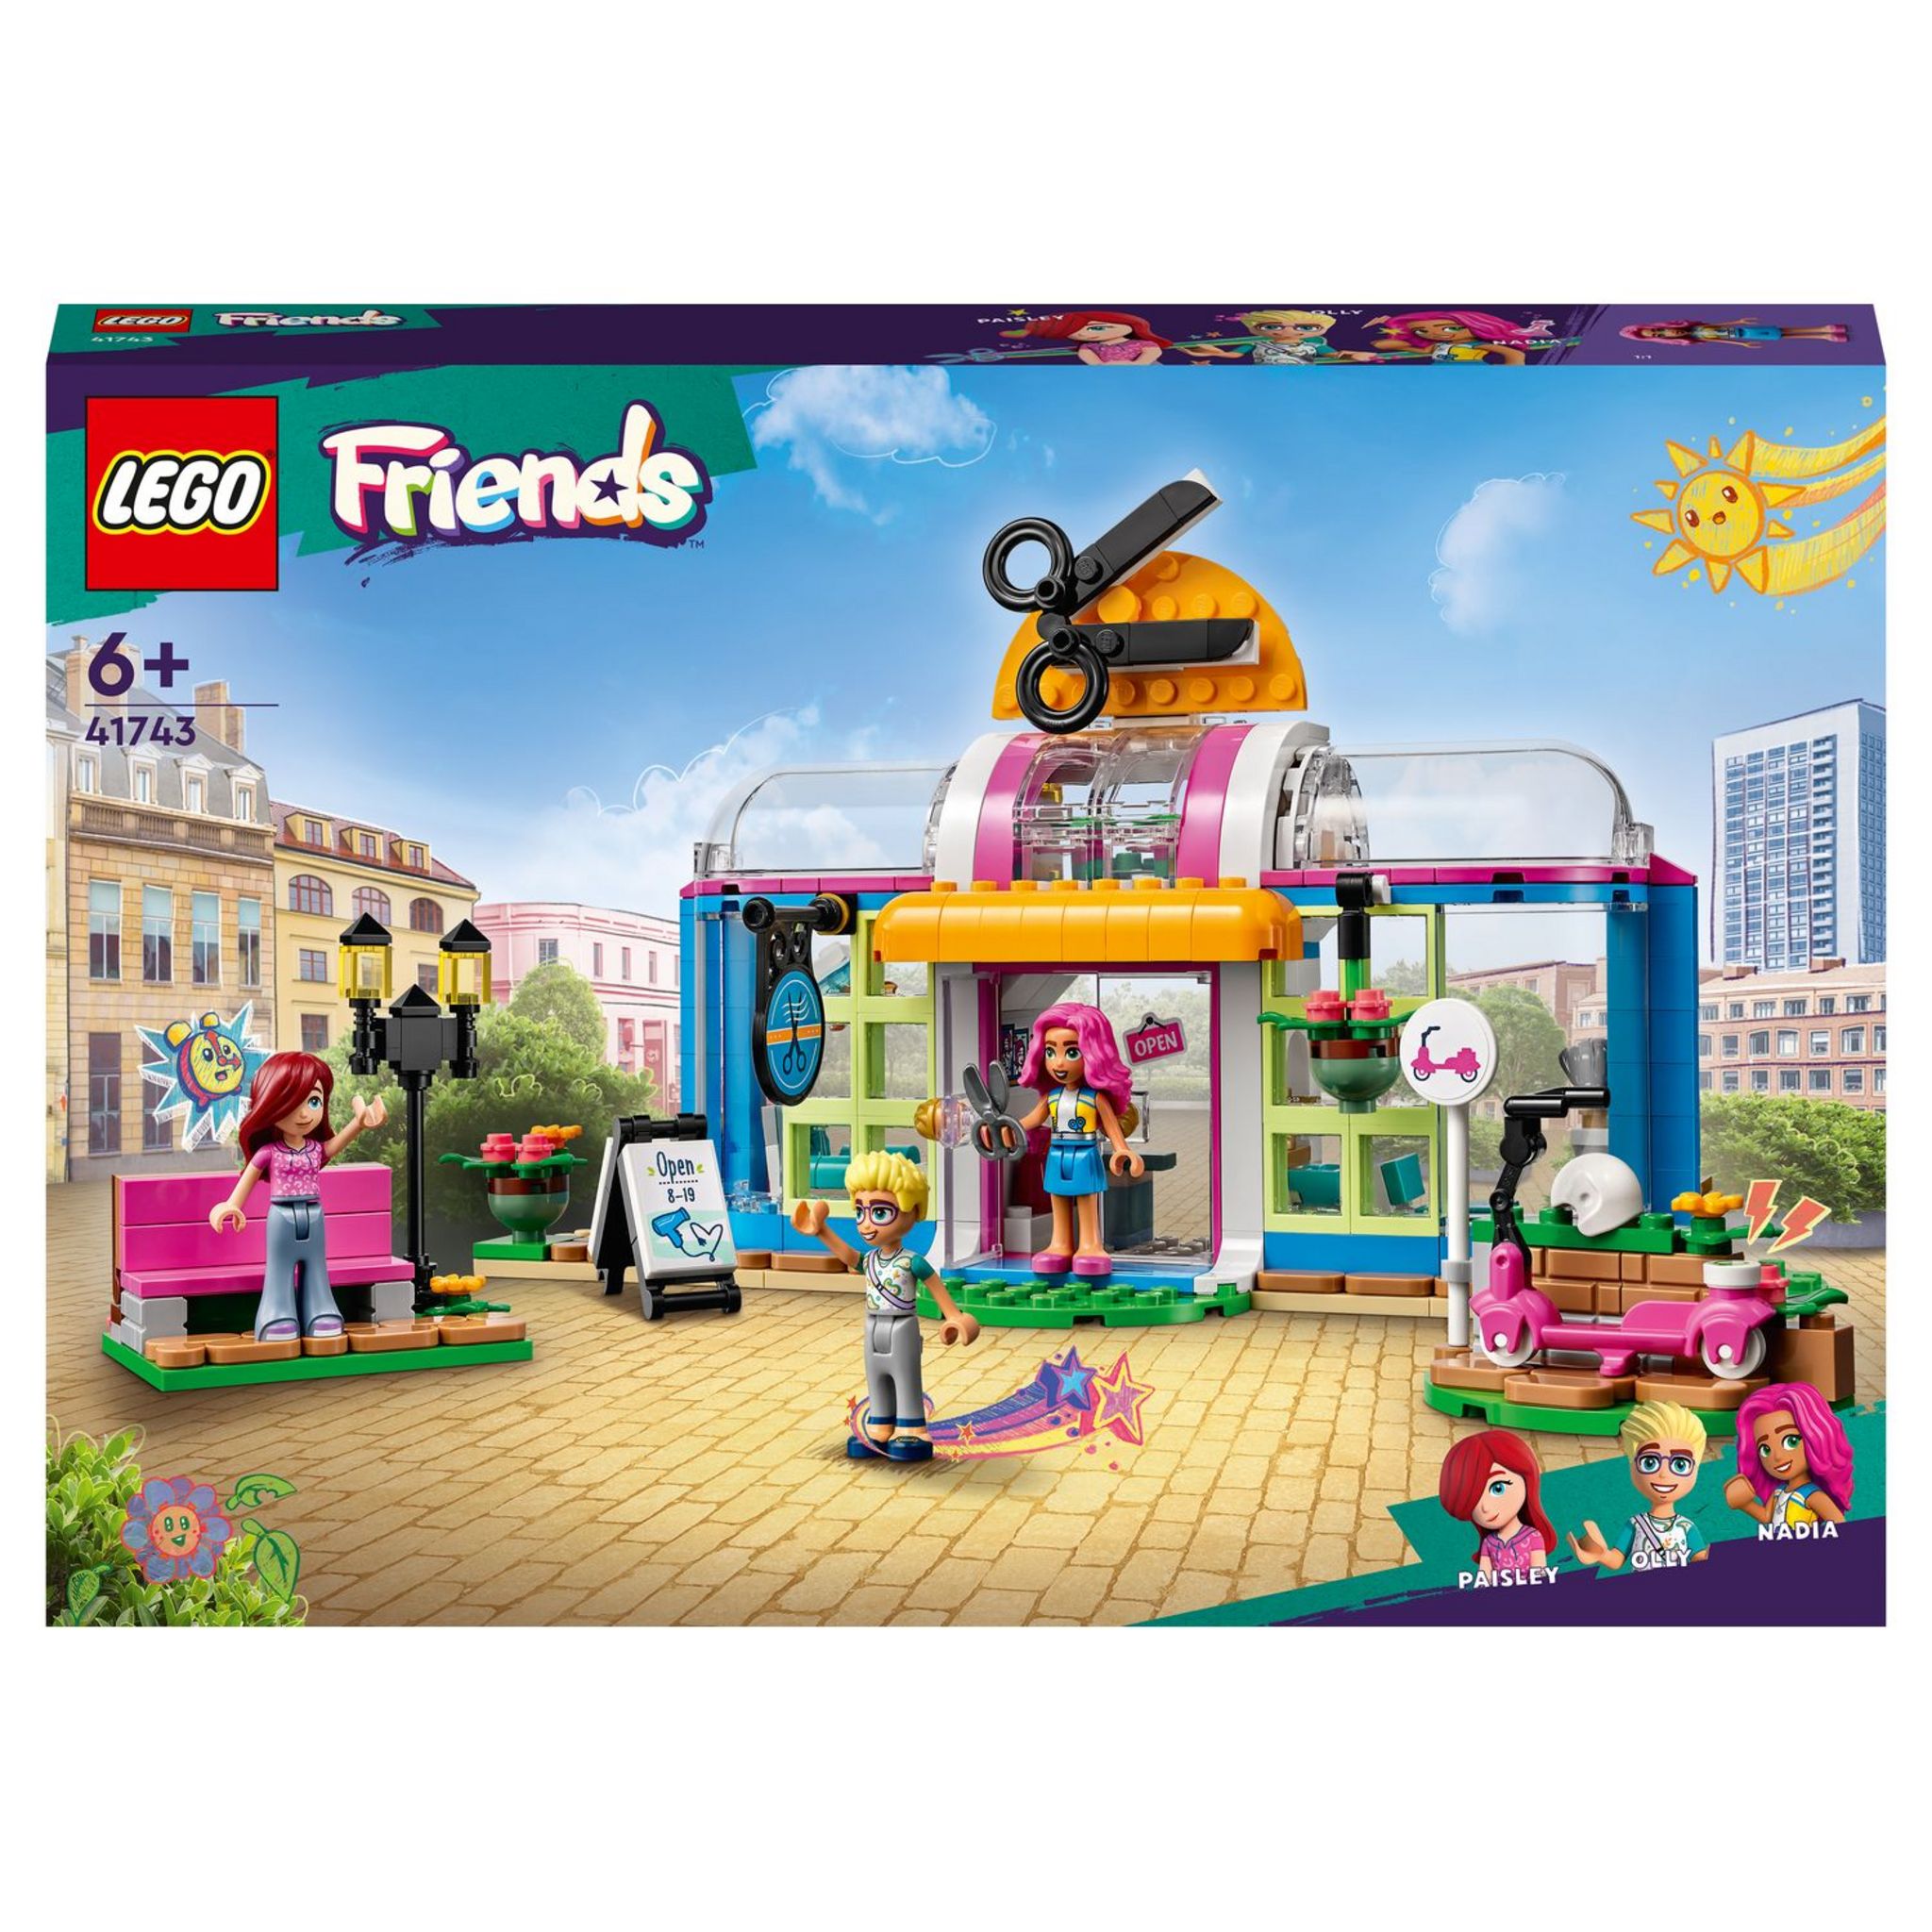 Tapis Lego Friends pas cher - Achat neuf et occasion